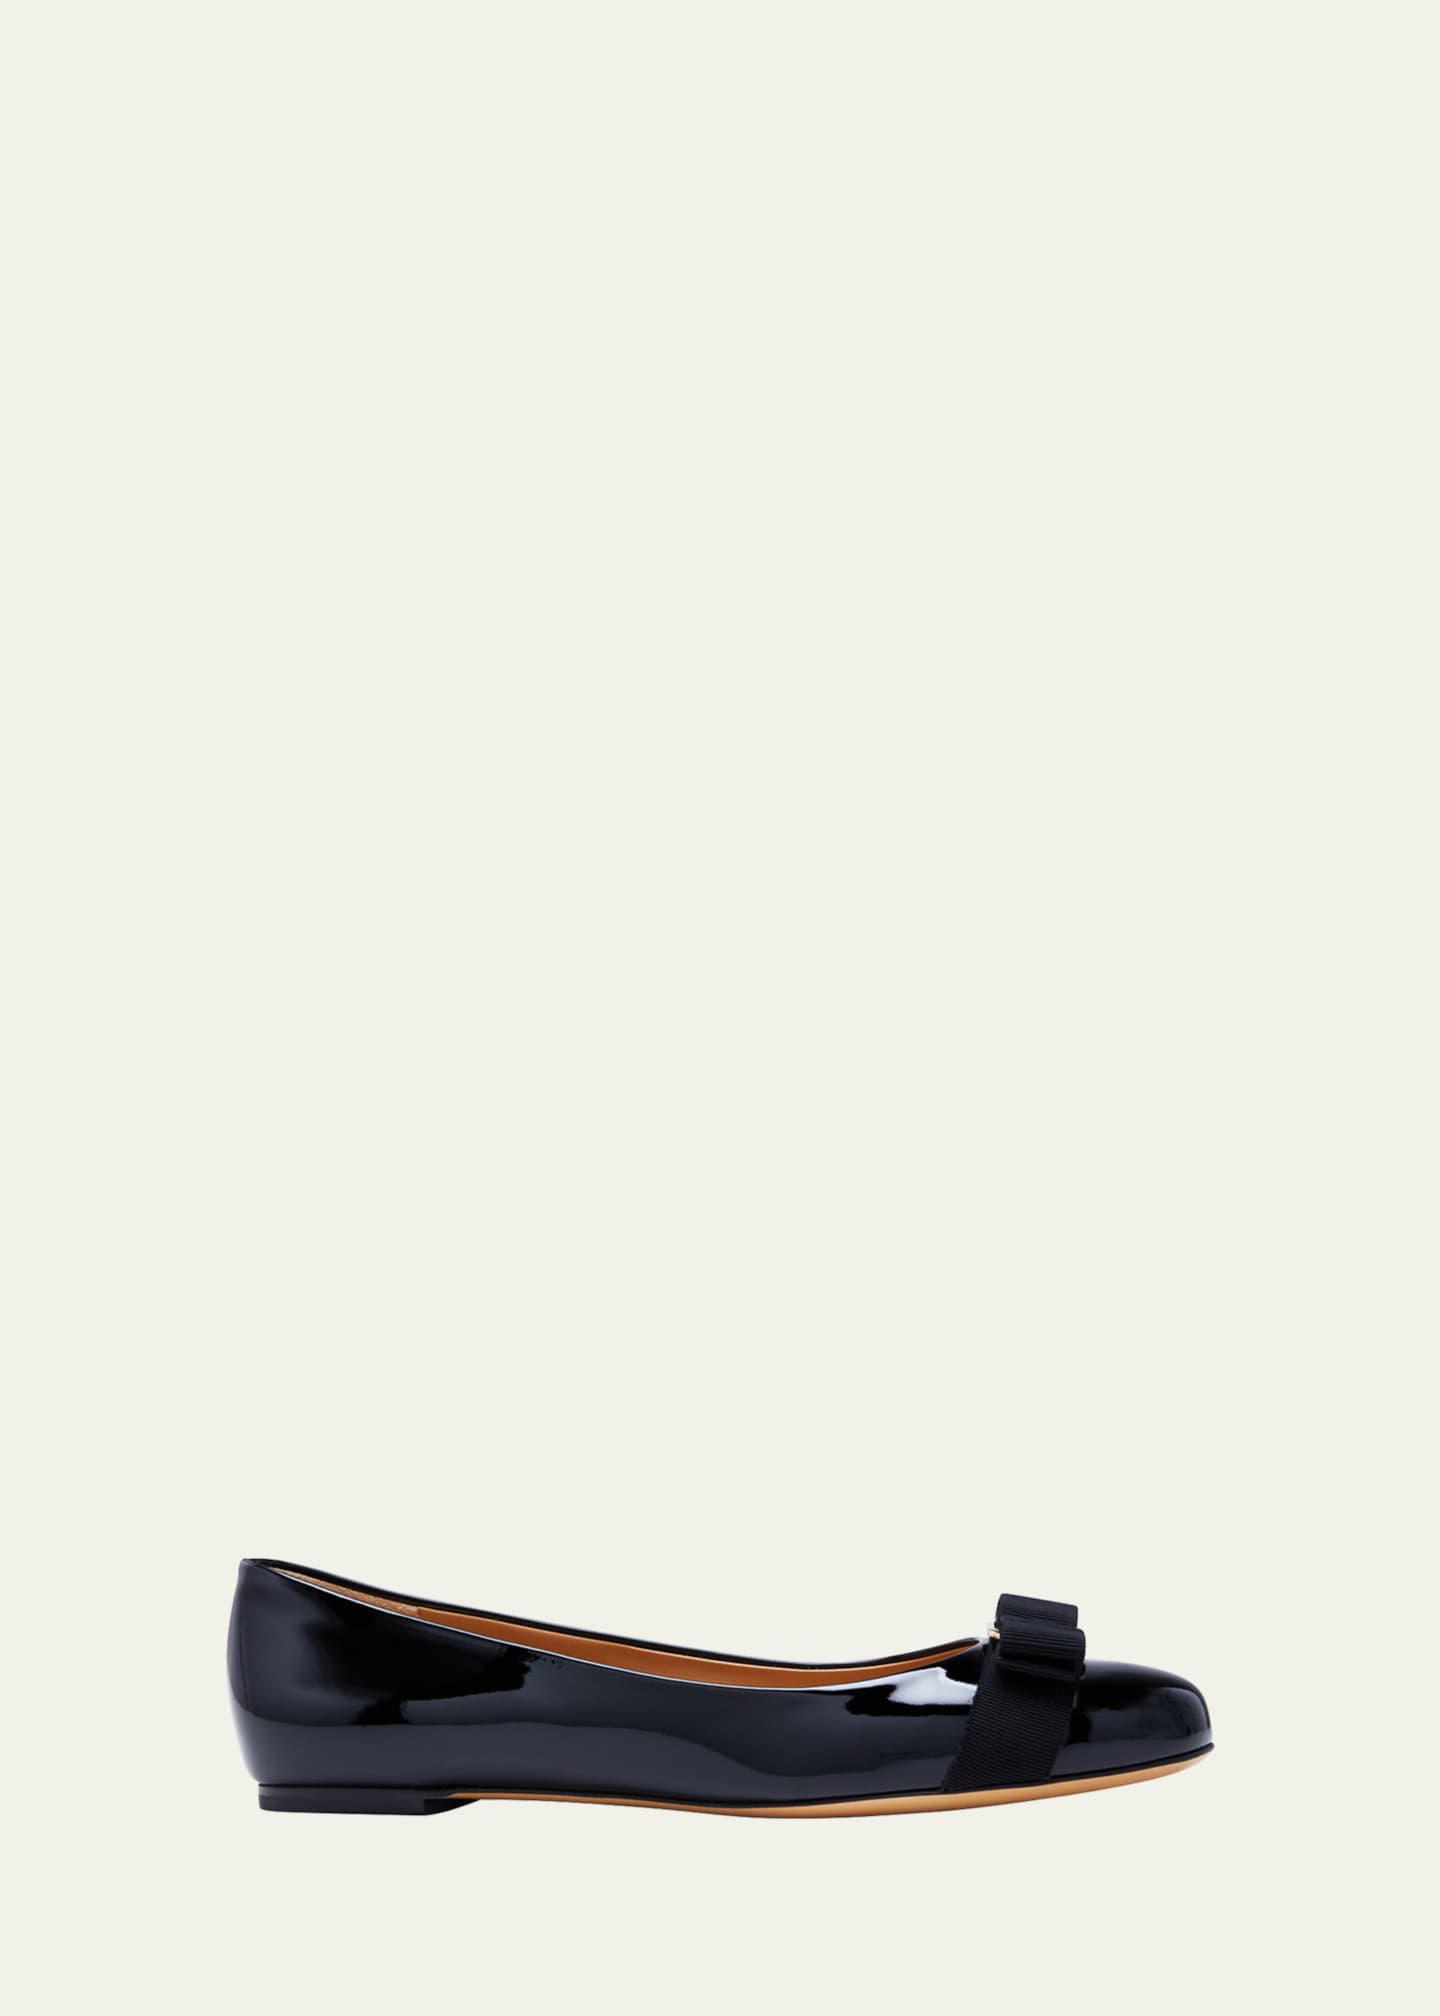 Salvatore Ferragamo Black Lace Bow Ballerina Flat - Size 9.5 - Shoes